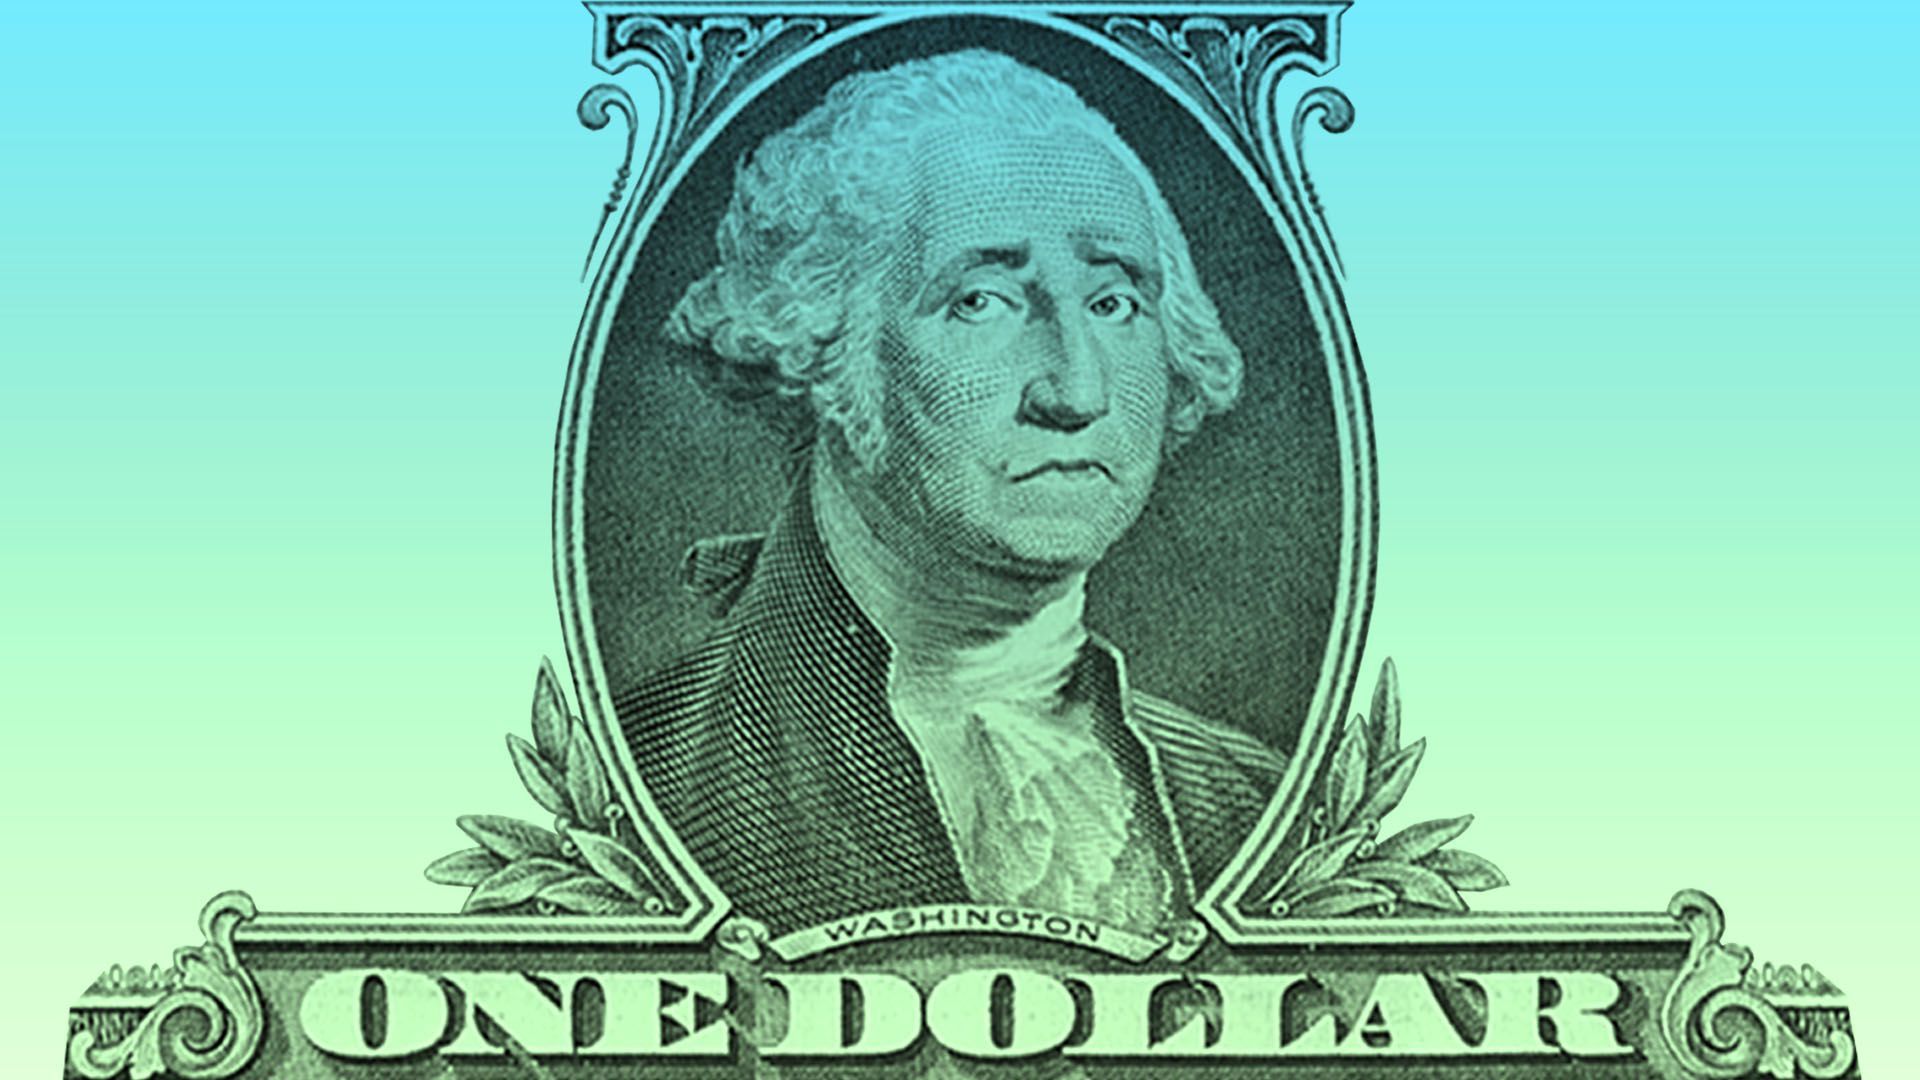 Illustration of George Washington looking concerned on a dollar bill